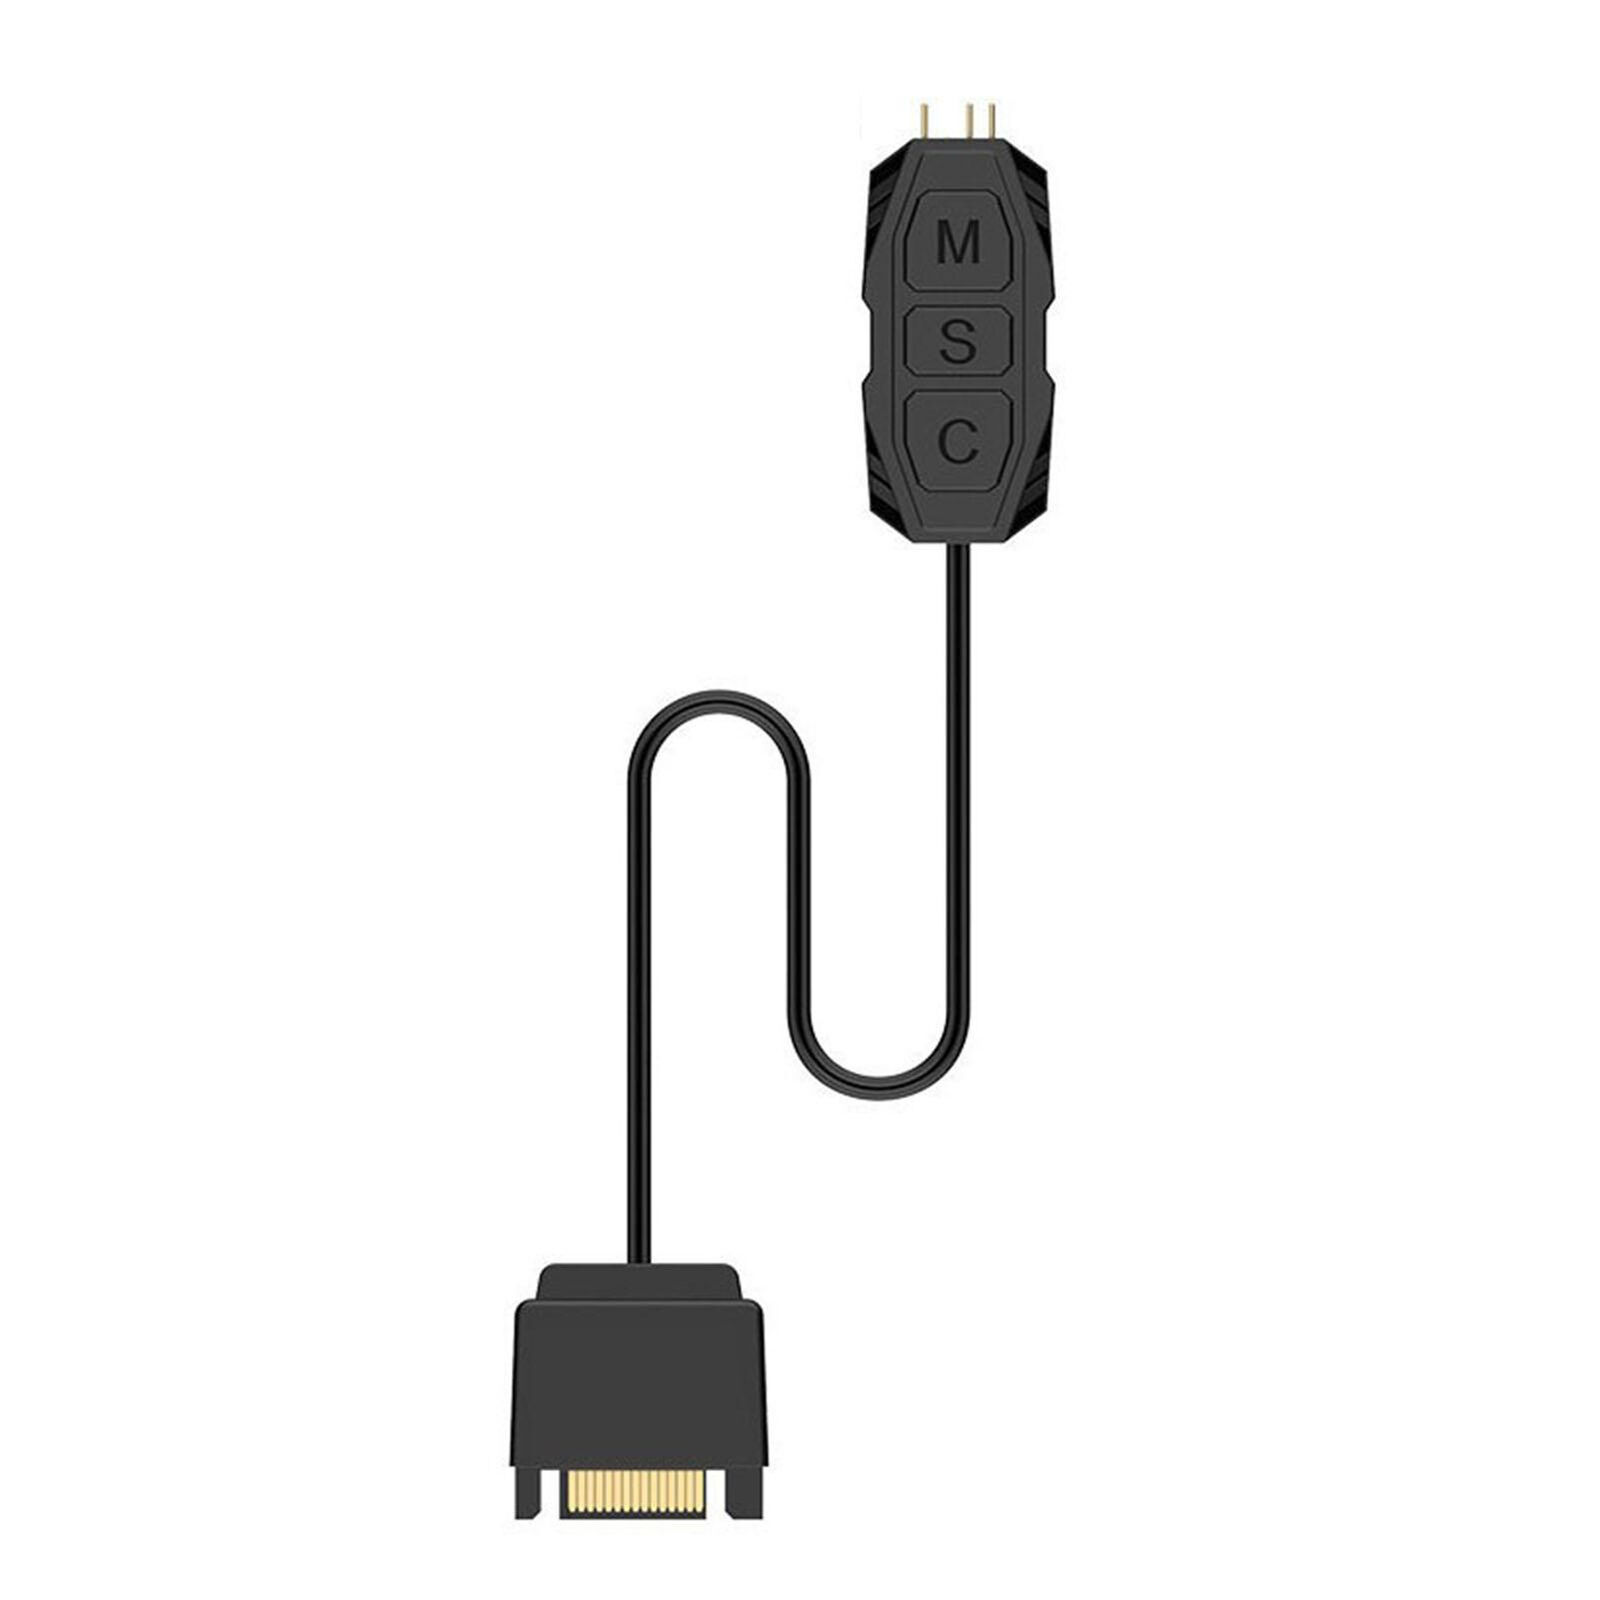 5V 3Pin to SATA ARGB Mini Adapter ARGB Controller Mini RGB Extension Cable